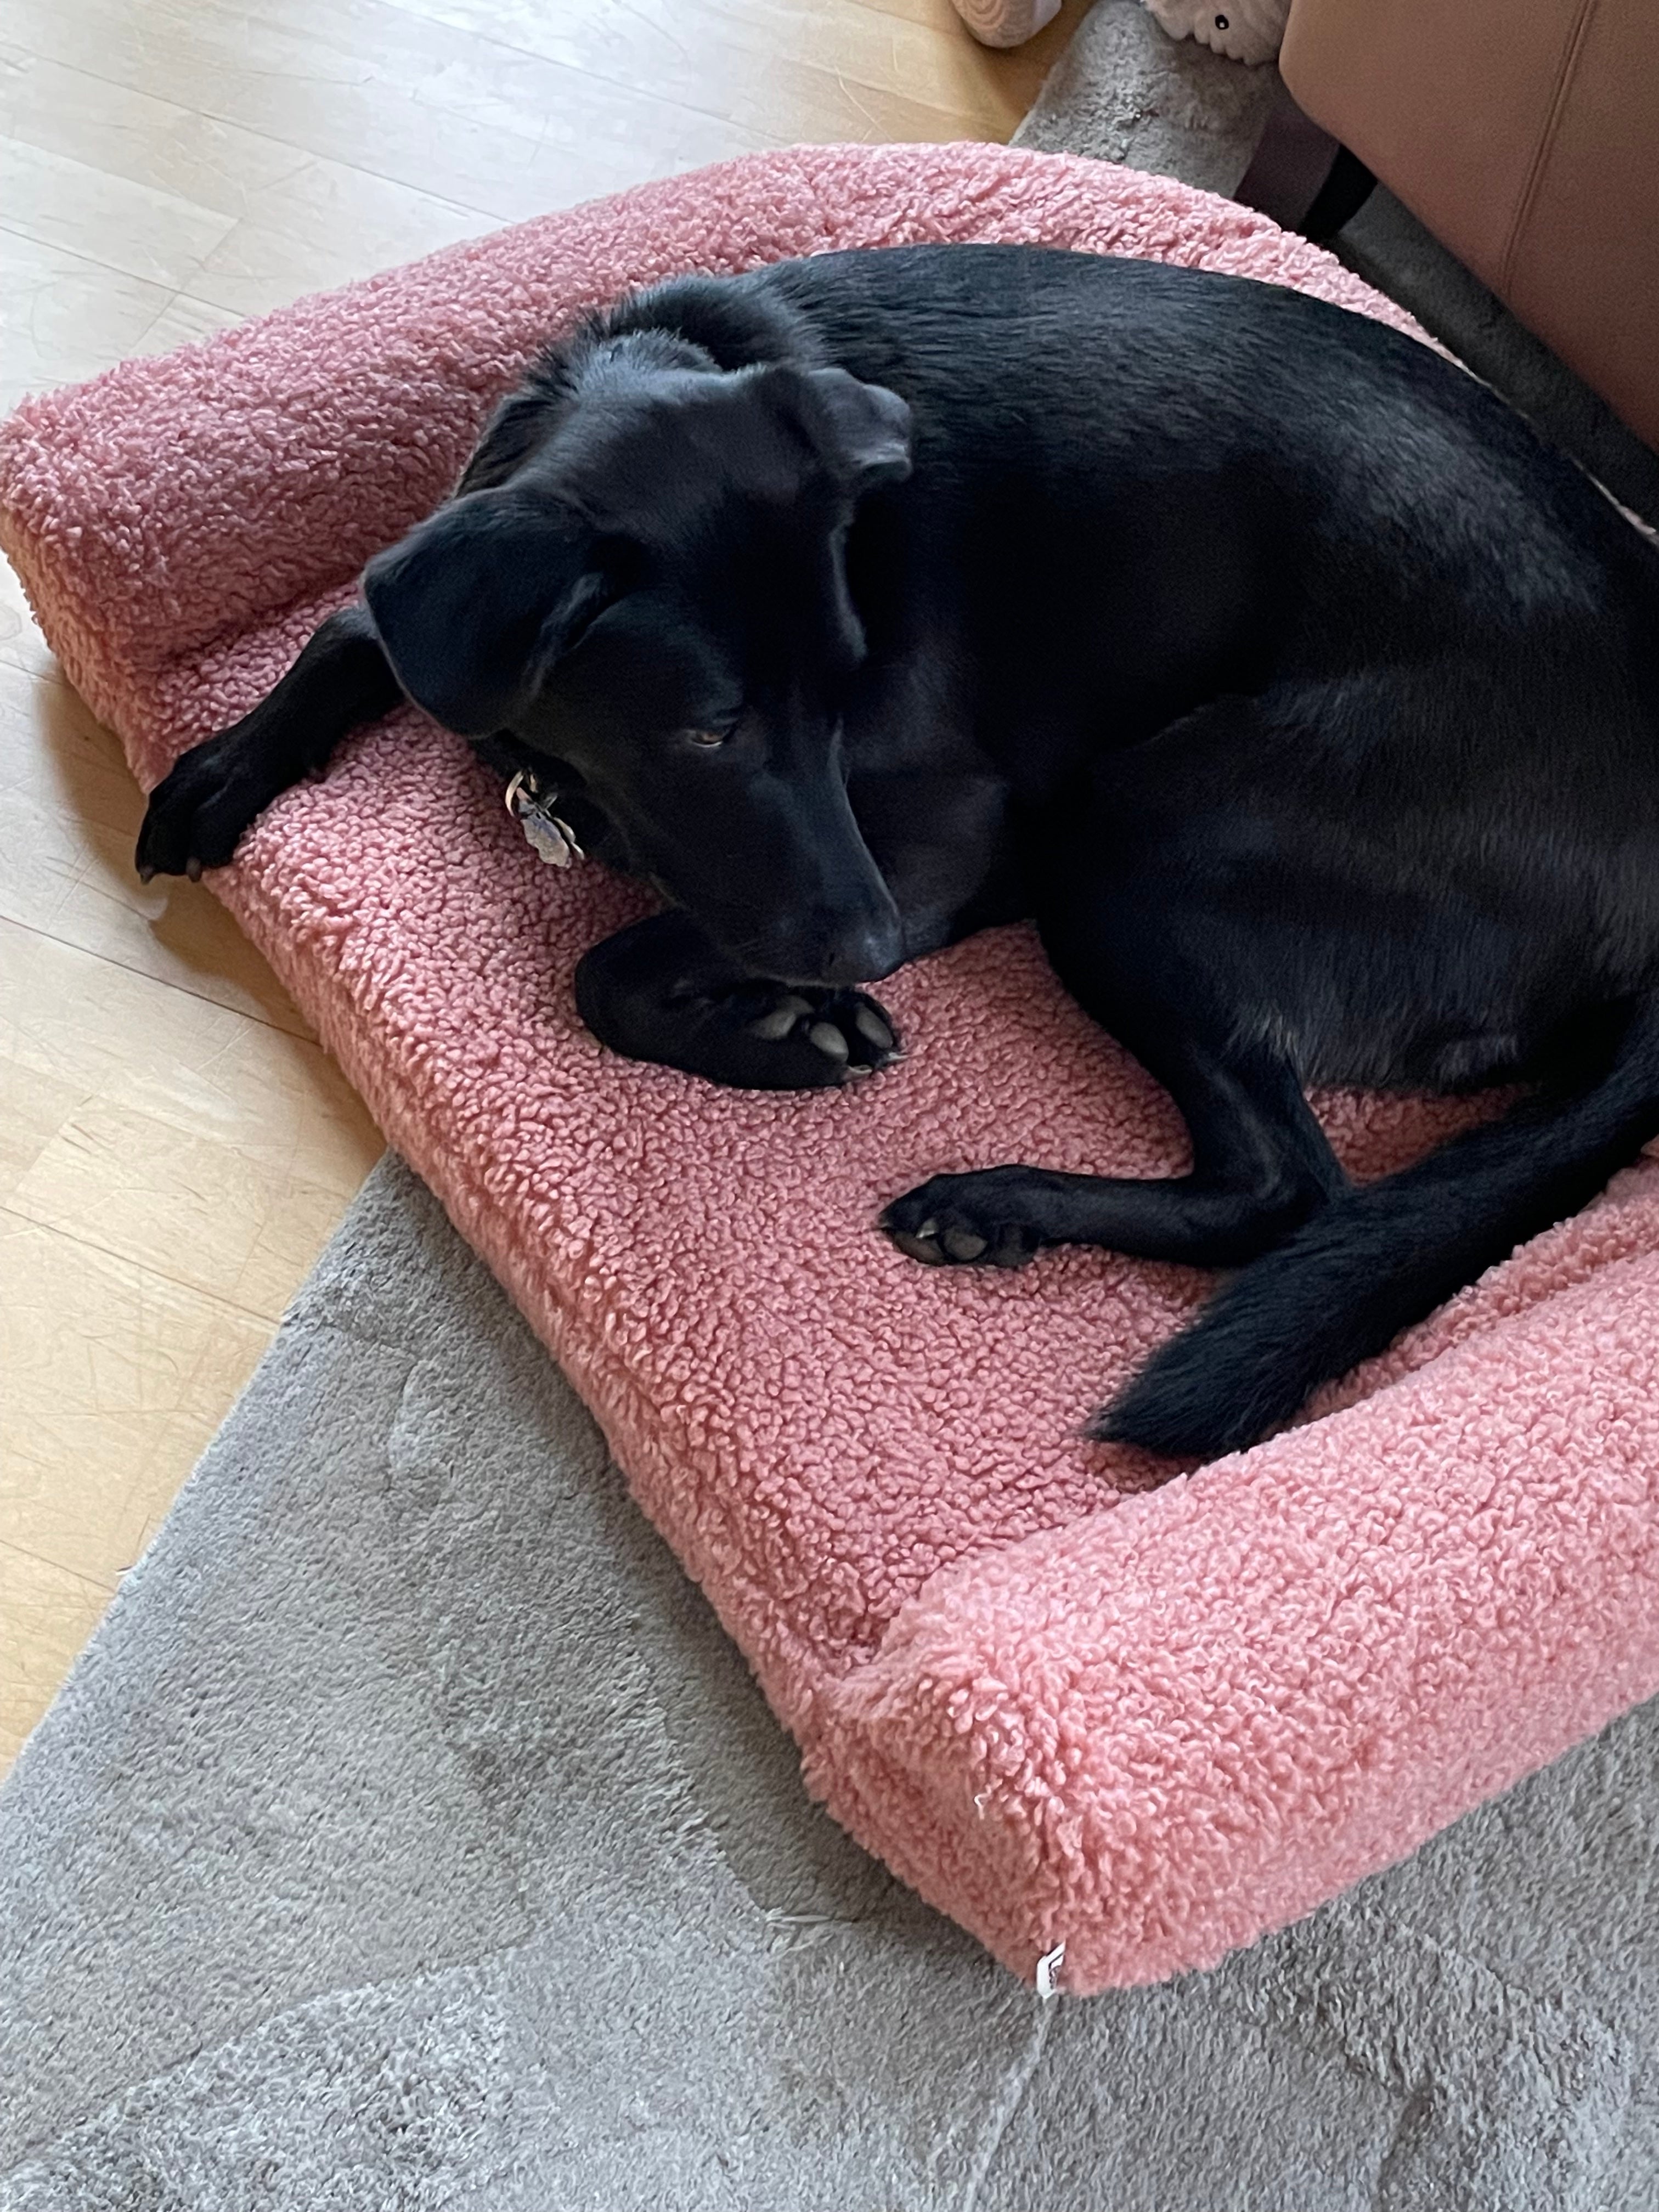 black dog lying on a u-shaped pink bed